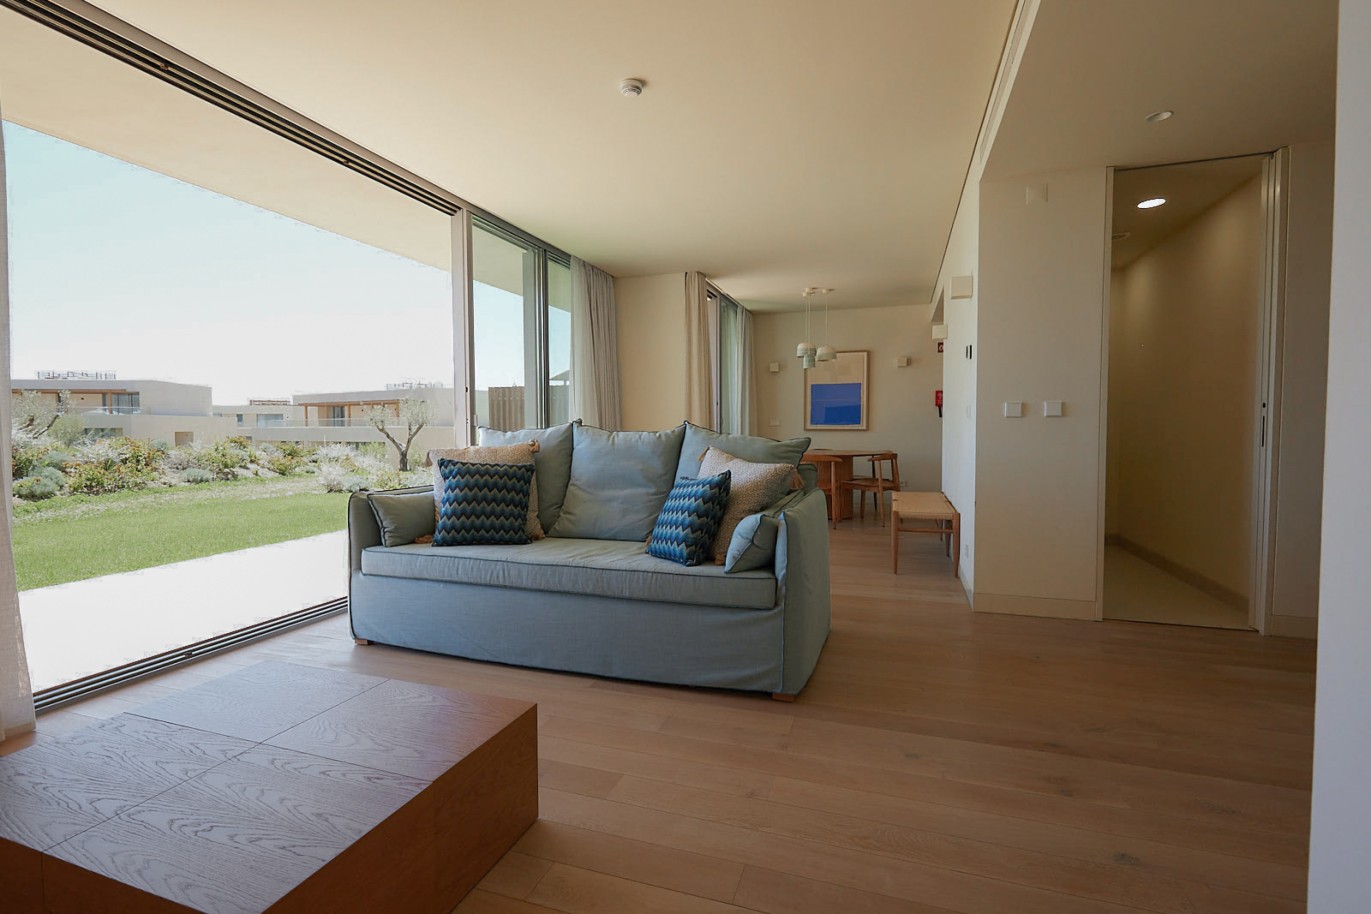 2 bedroom apartment in resort, for sale in Porches, Algarve_230583